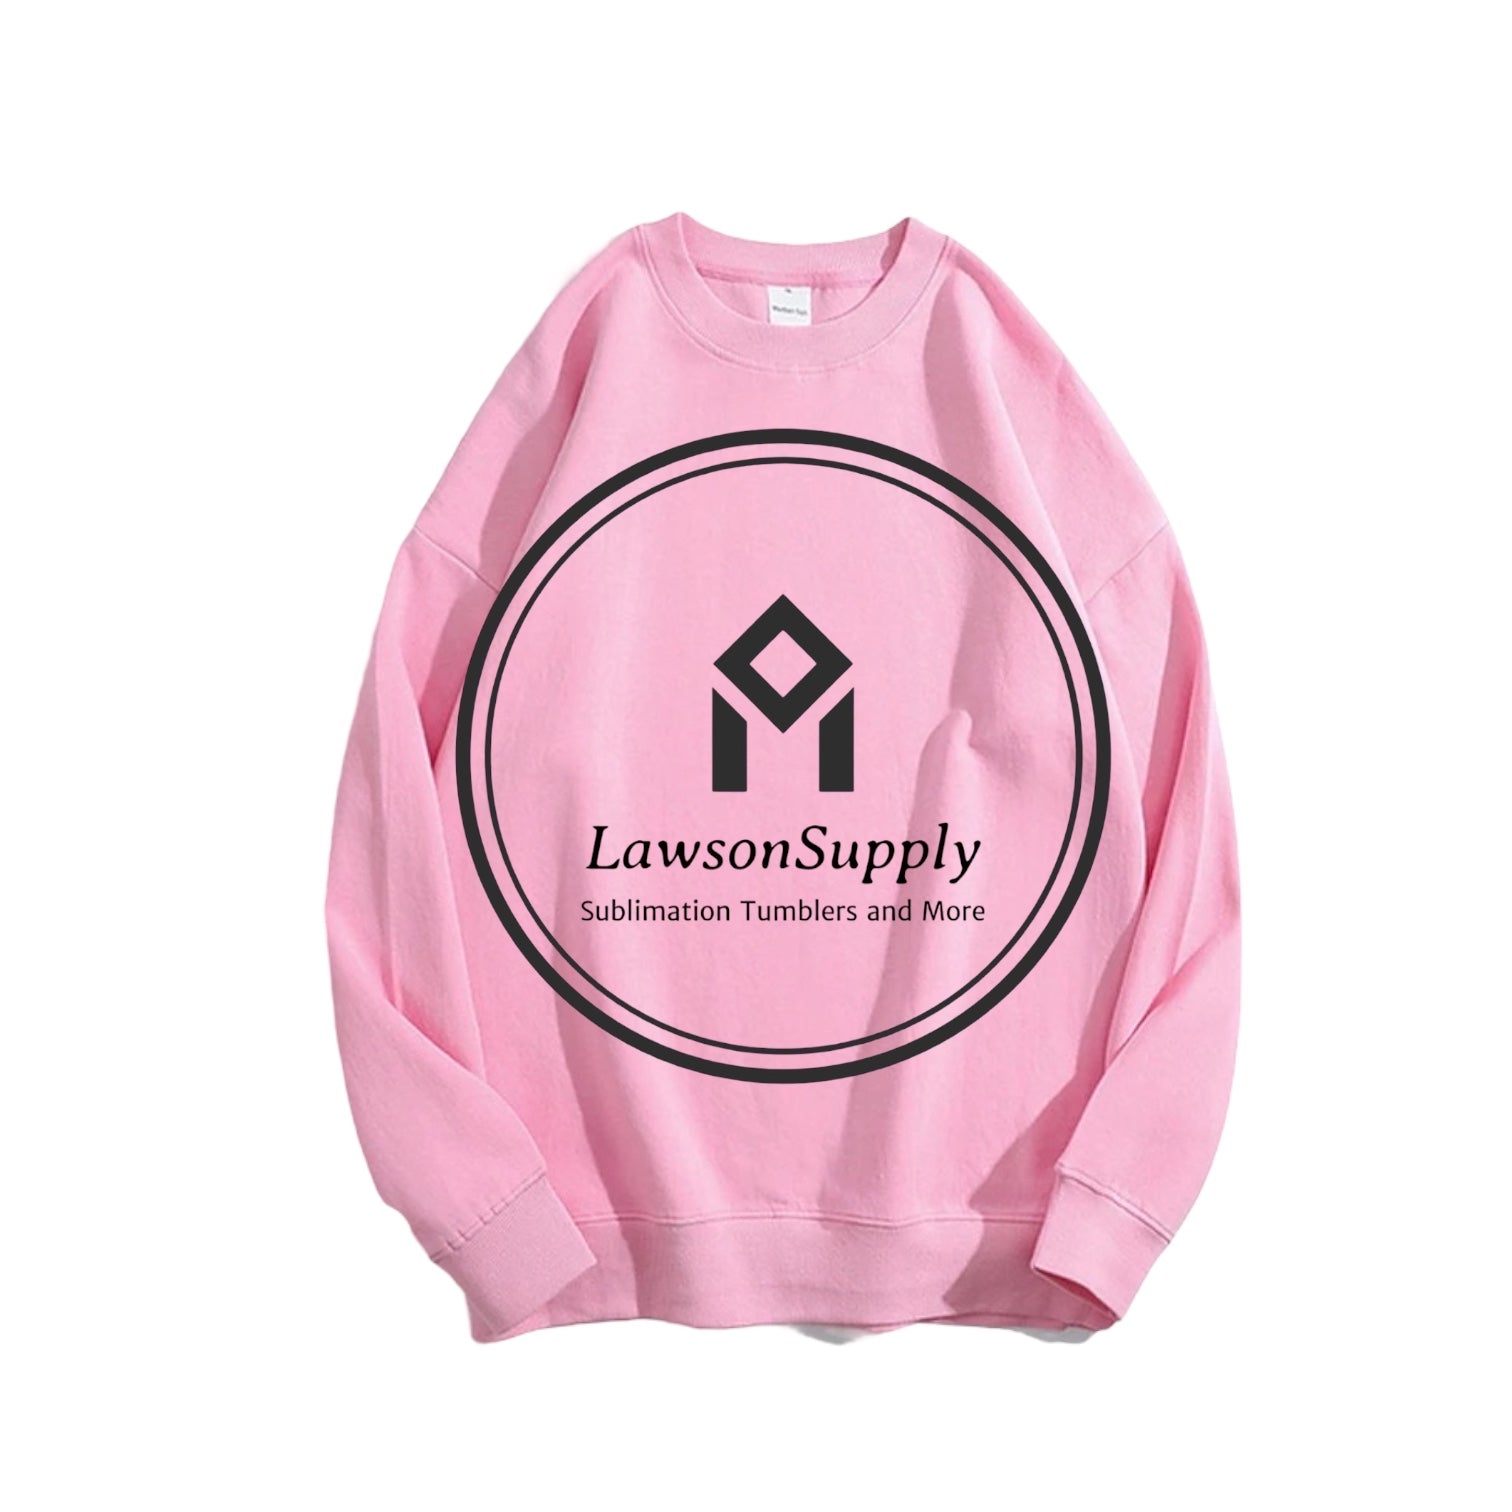 Purchase Wholesale sublimation sweatshirt. Free Returns & Net 60